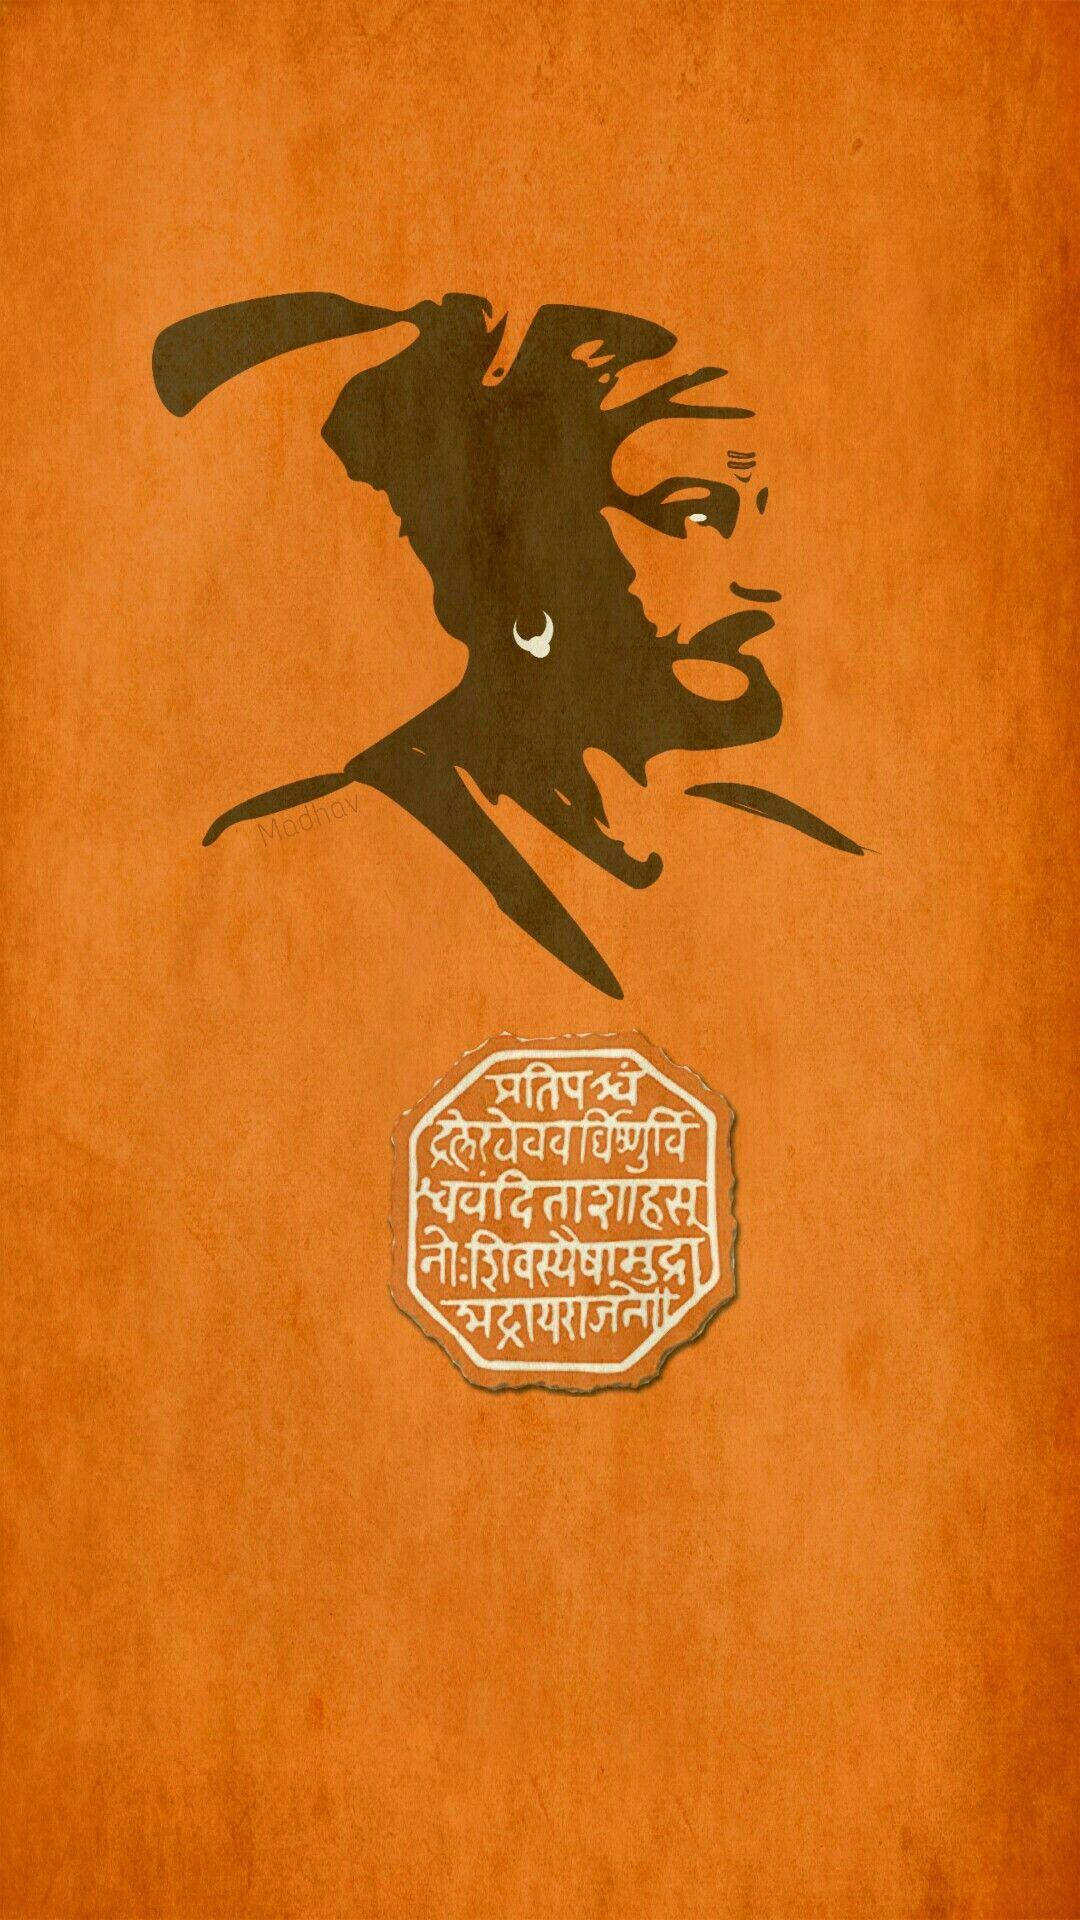 Shivaji Maharaj Paint Art On Orange Wall Hd Background